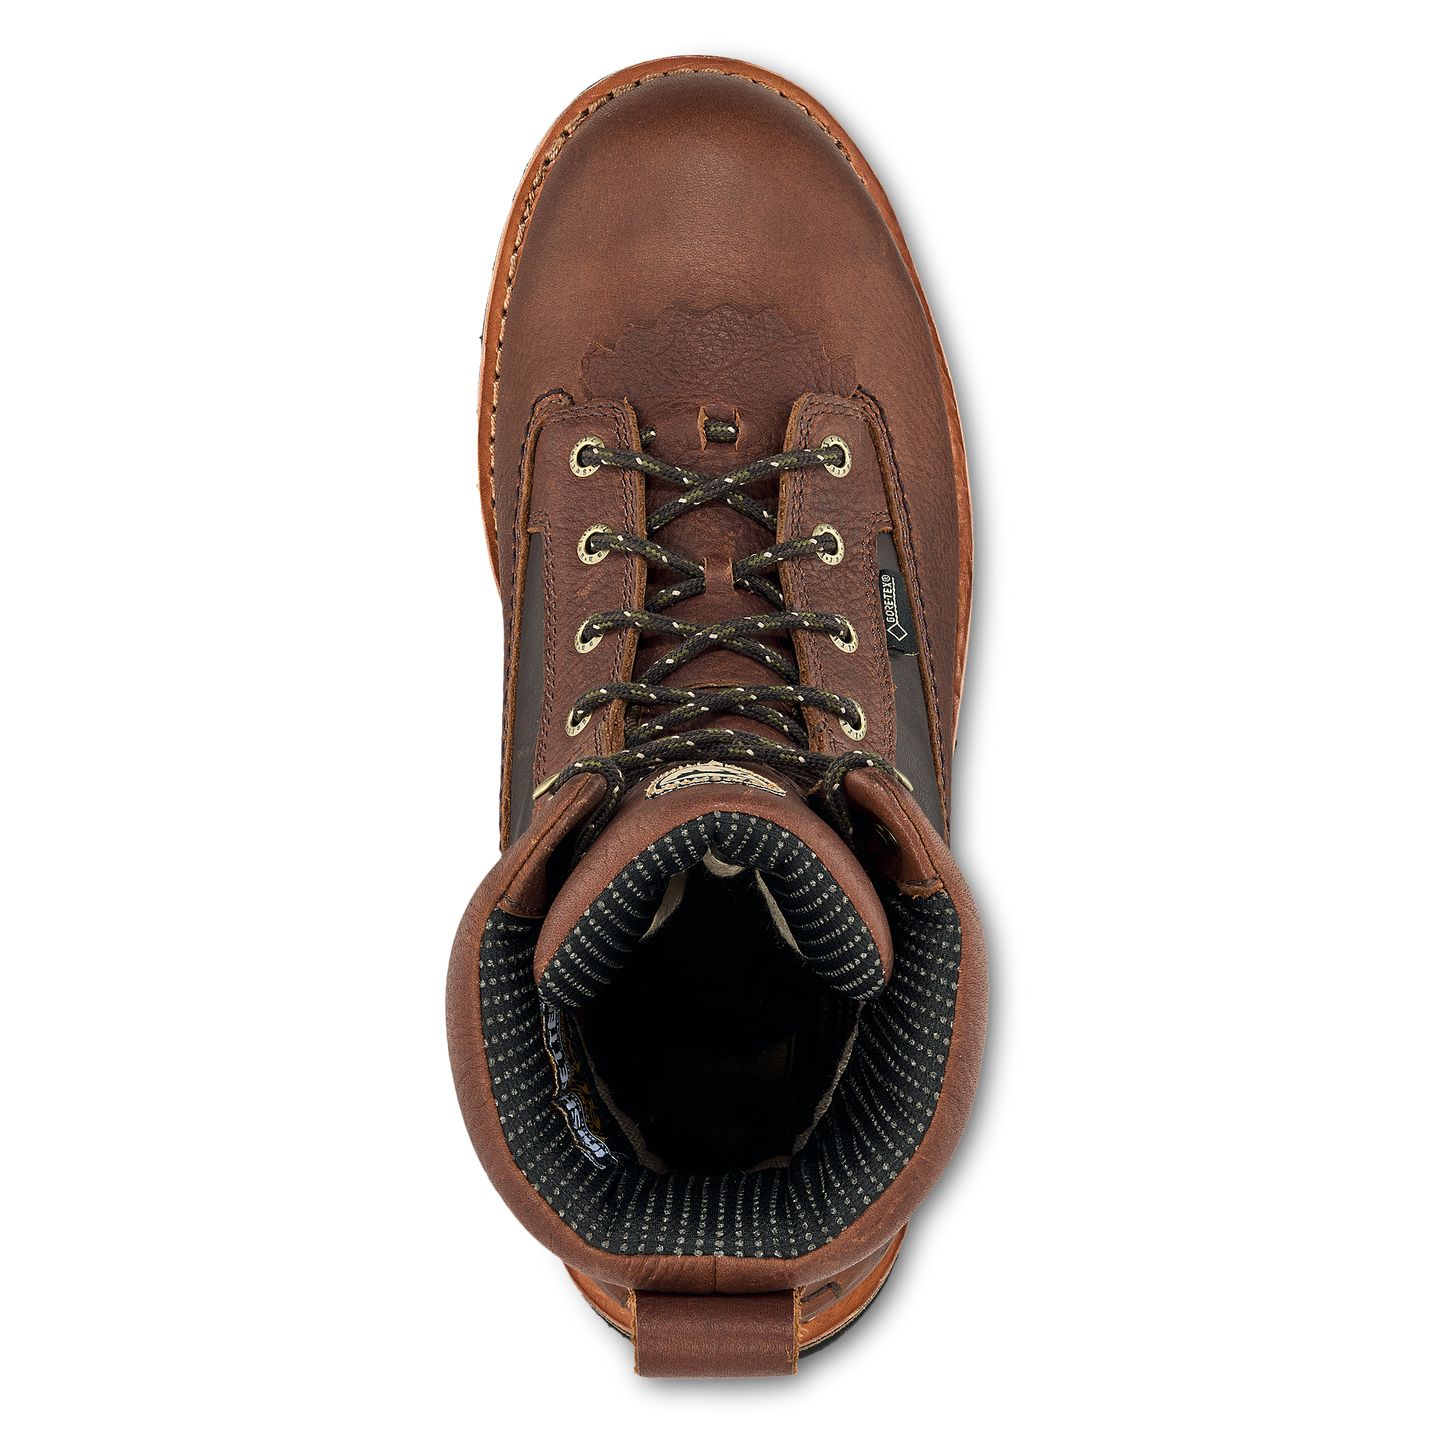 Irish Setter Men's Elk Tracker Insulated Waterproof Boots 00882